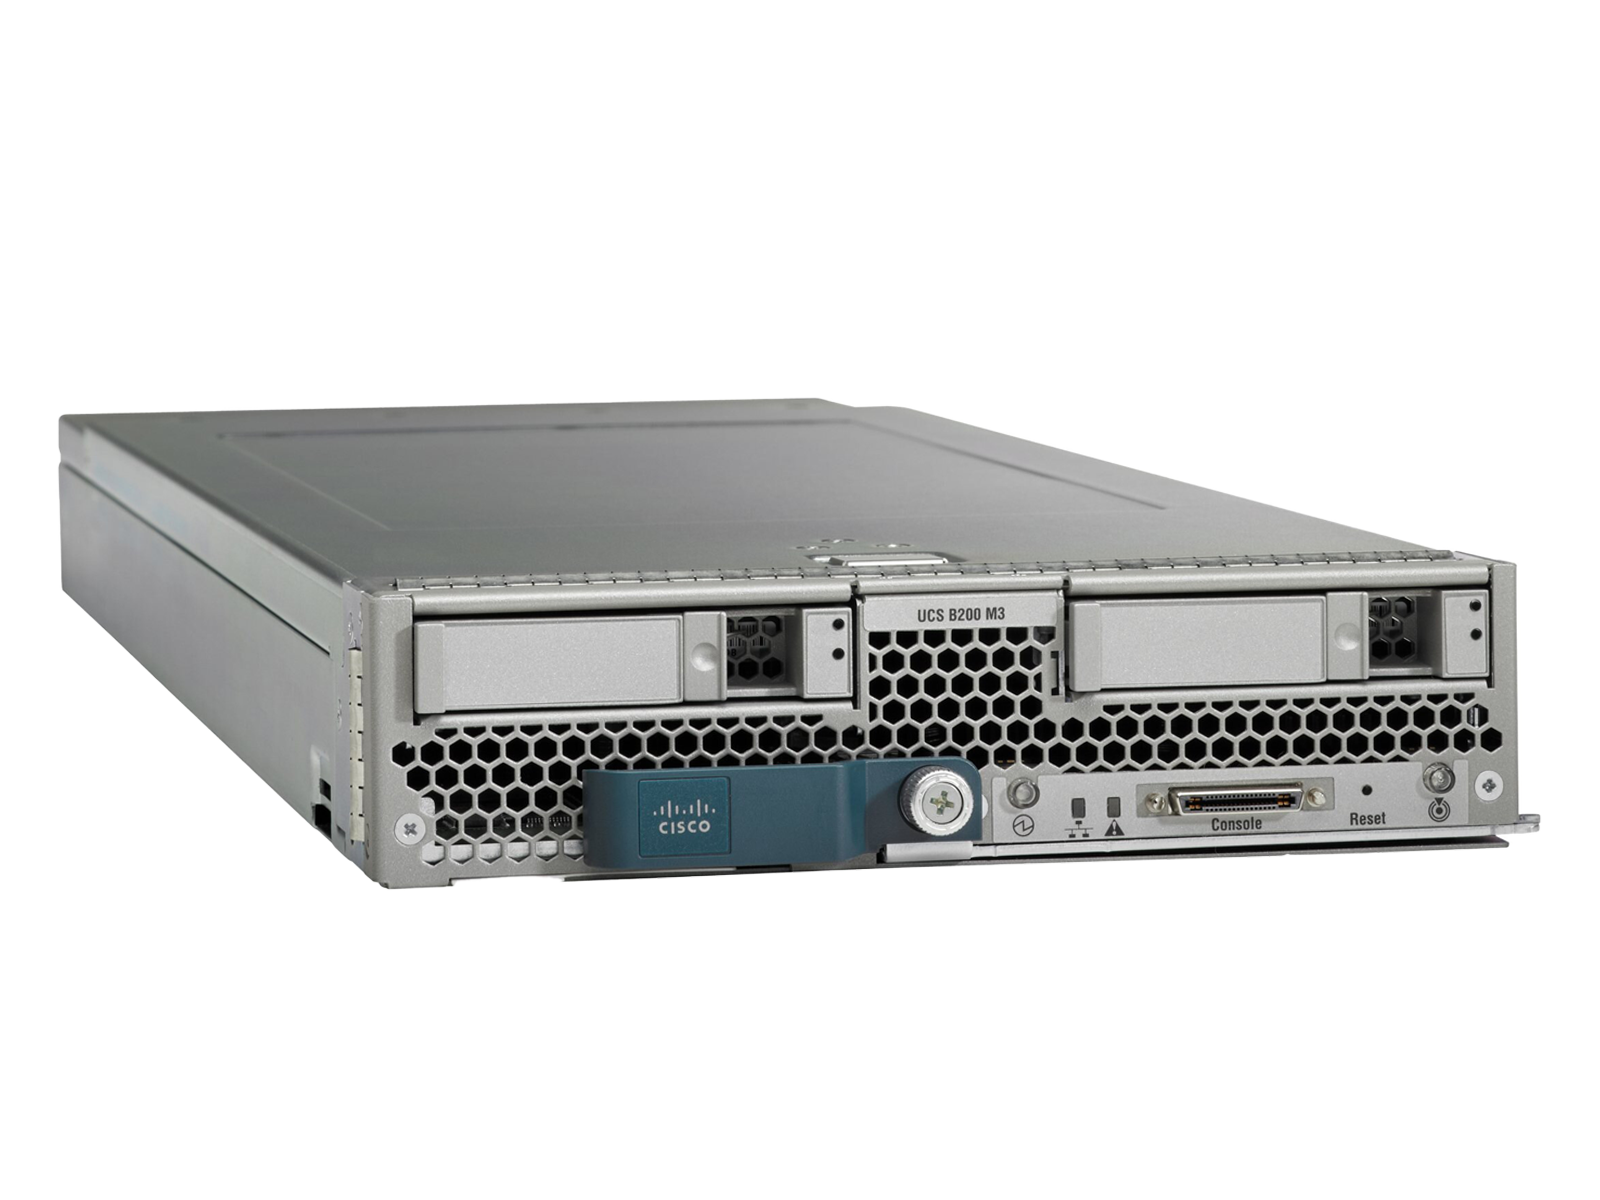 Lot of 8 Cisco B200 M3 16x E5-2670V2 1024GB Ram Blade Servers VIC1240 14900R